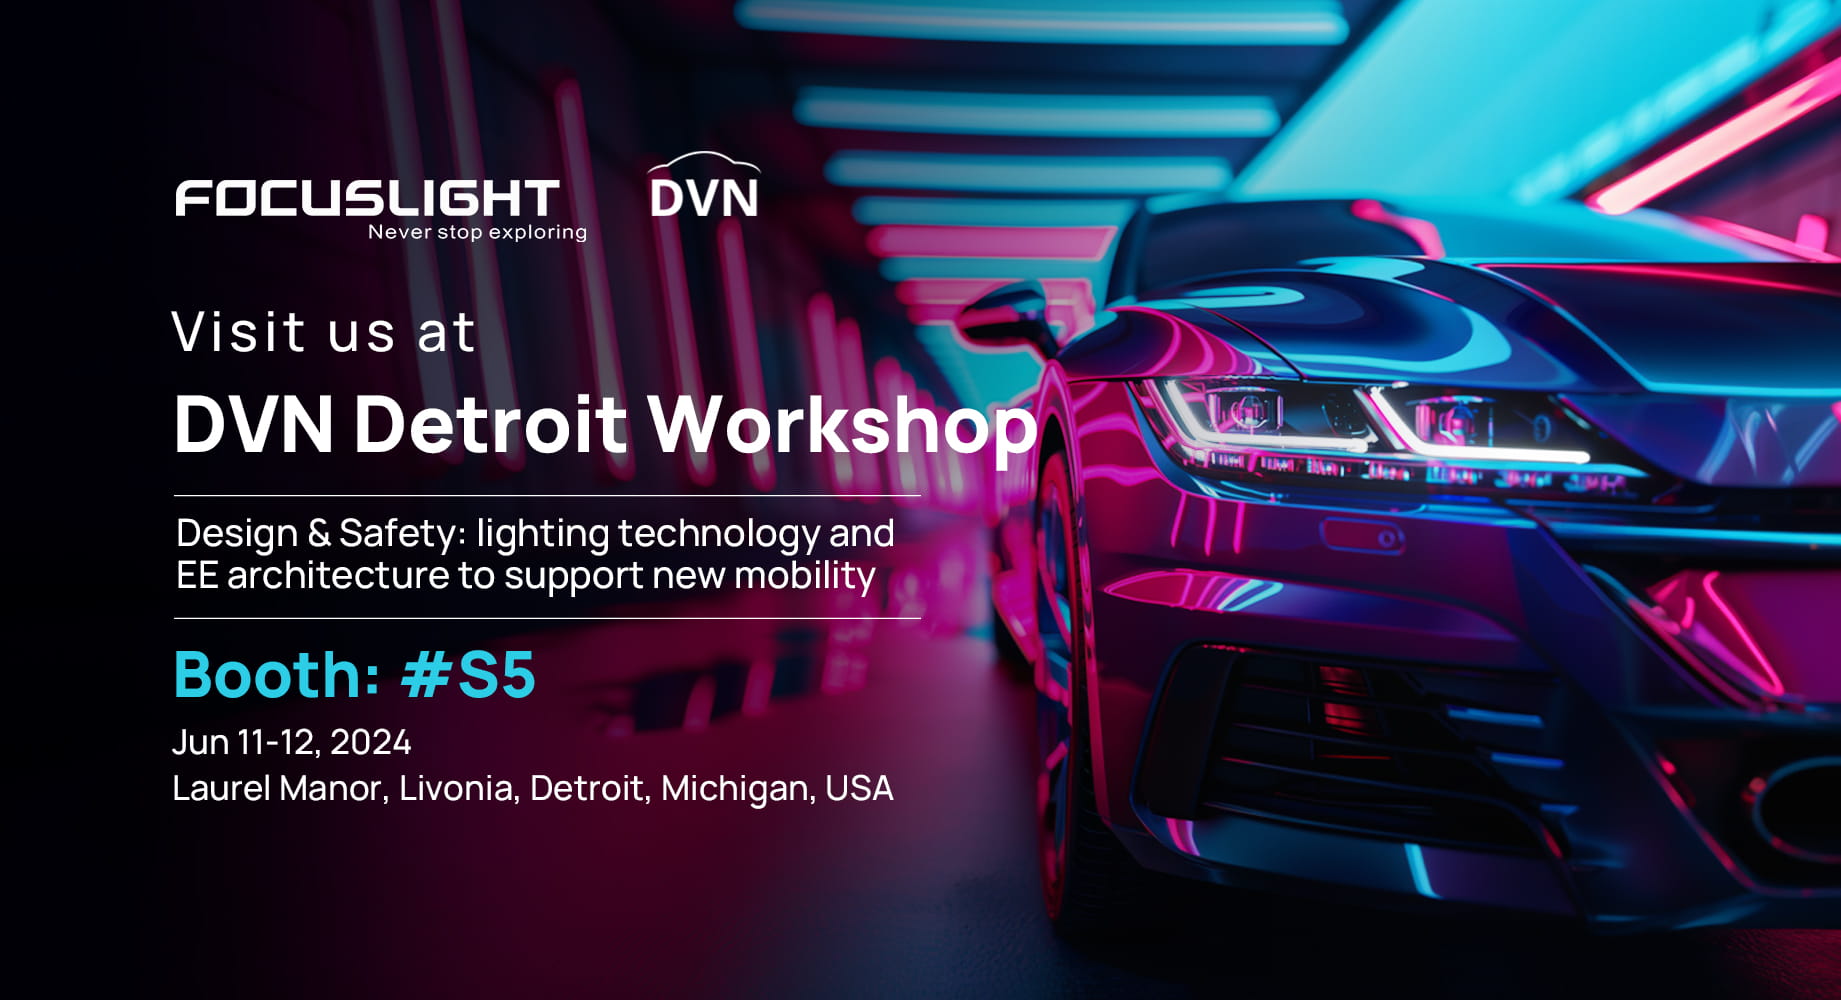 Focuslight Will Be Exhibiting at DVN Detroit Workshop 